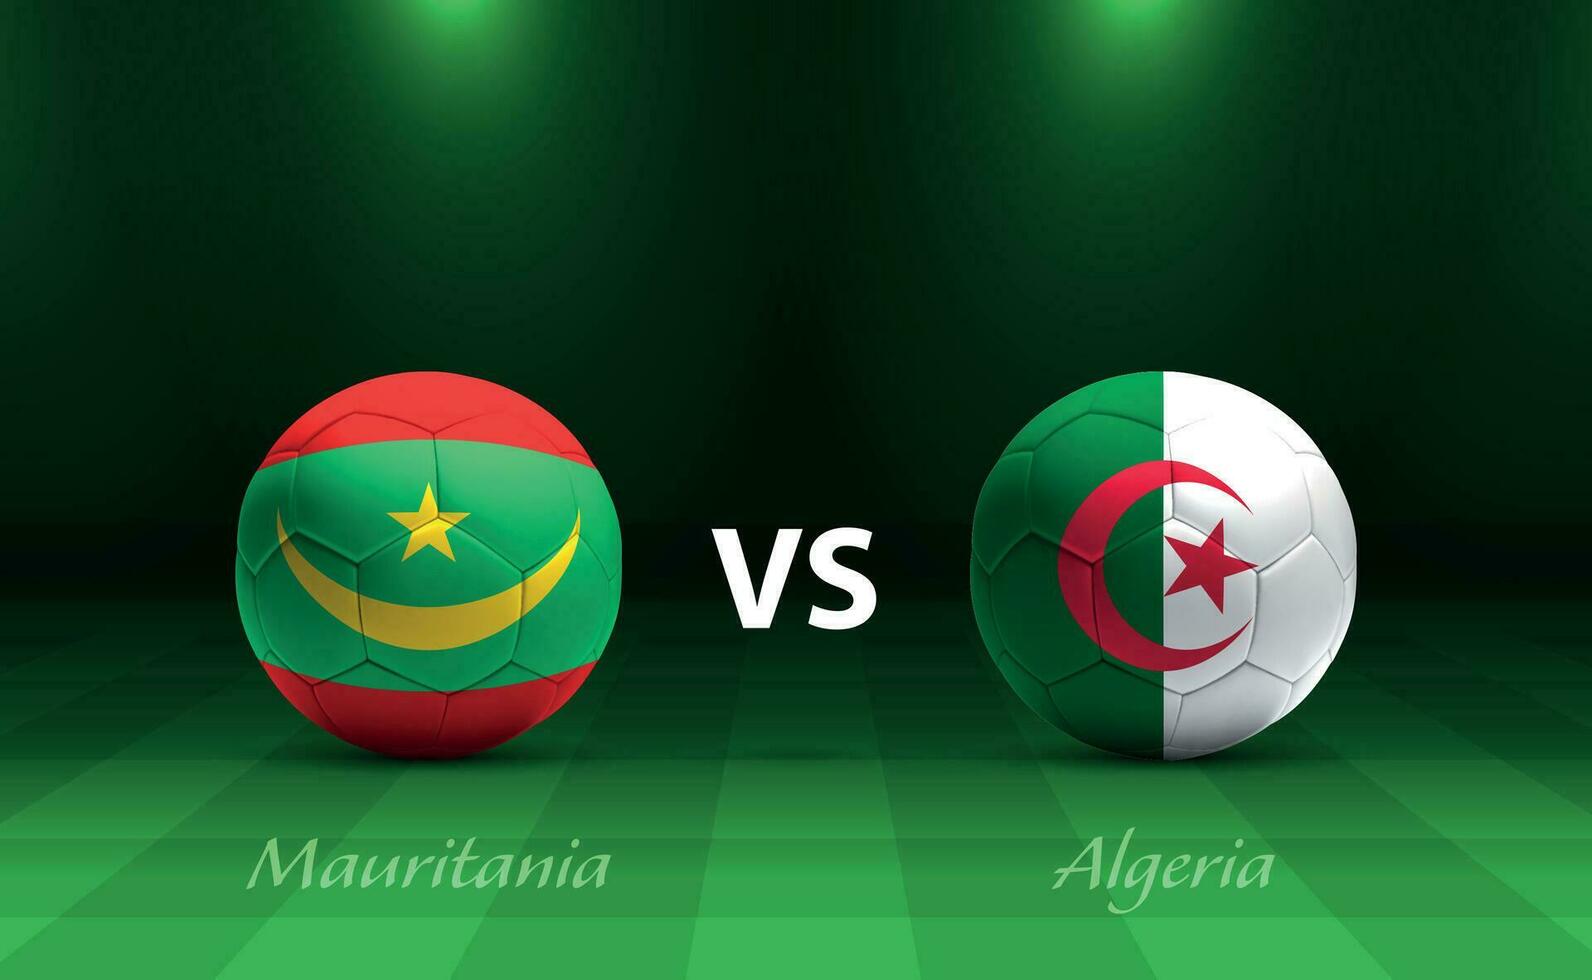 Mauritania vs Algeria football scoreboard broadcast template vector